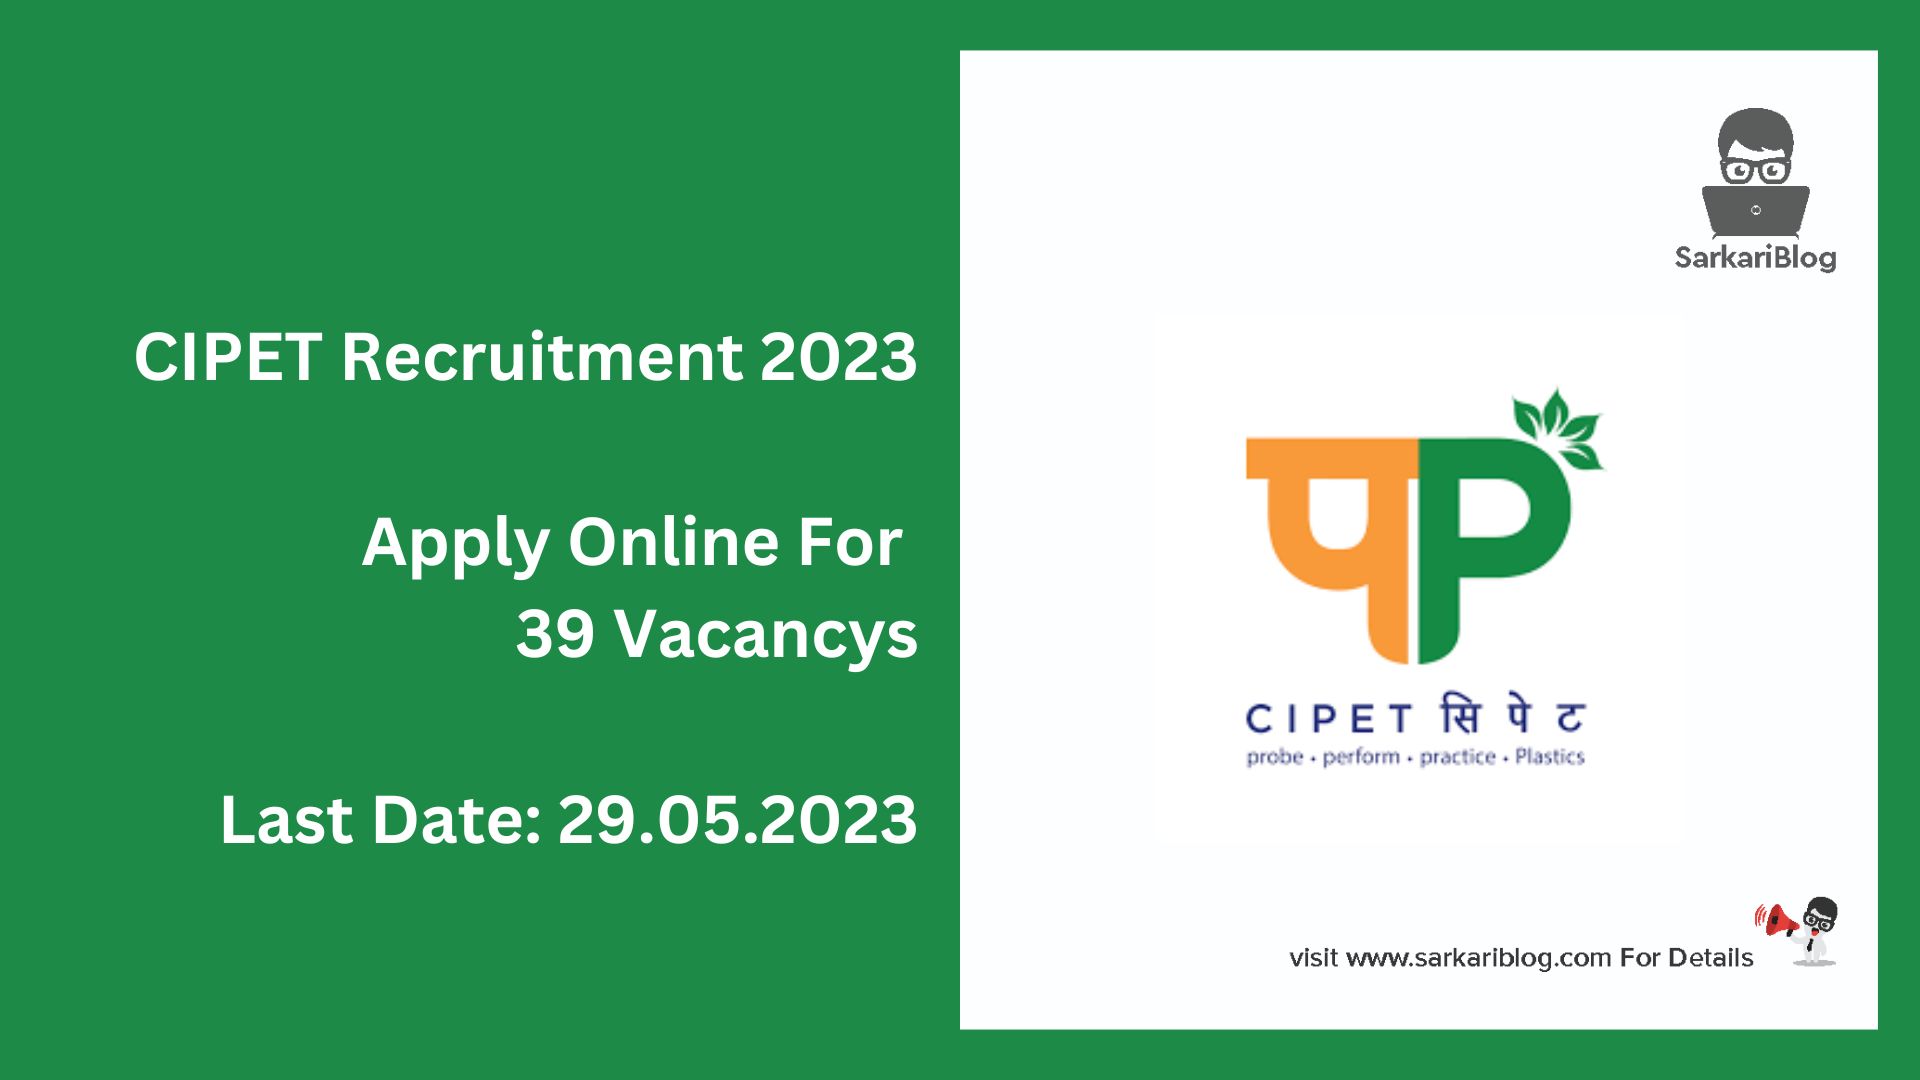 CIPET Recruitment 2023